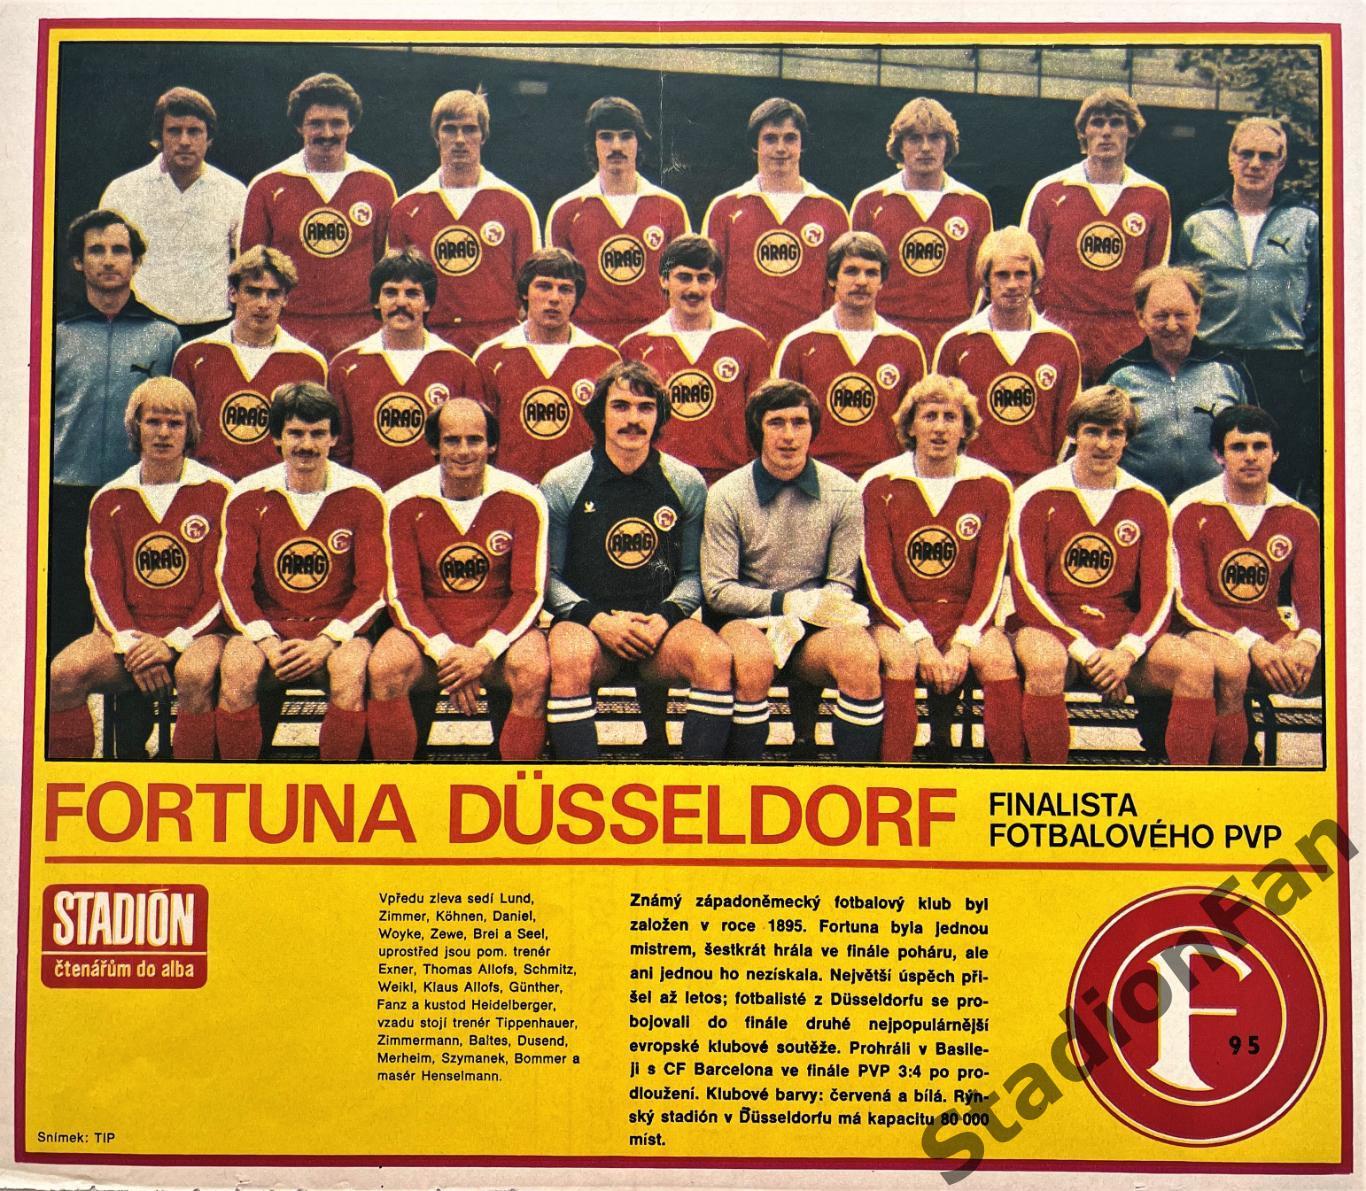 Постер из журнала Стадион (Stadion) - Fortuna Dusseldorf, 1979.